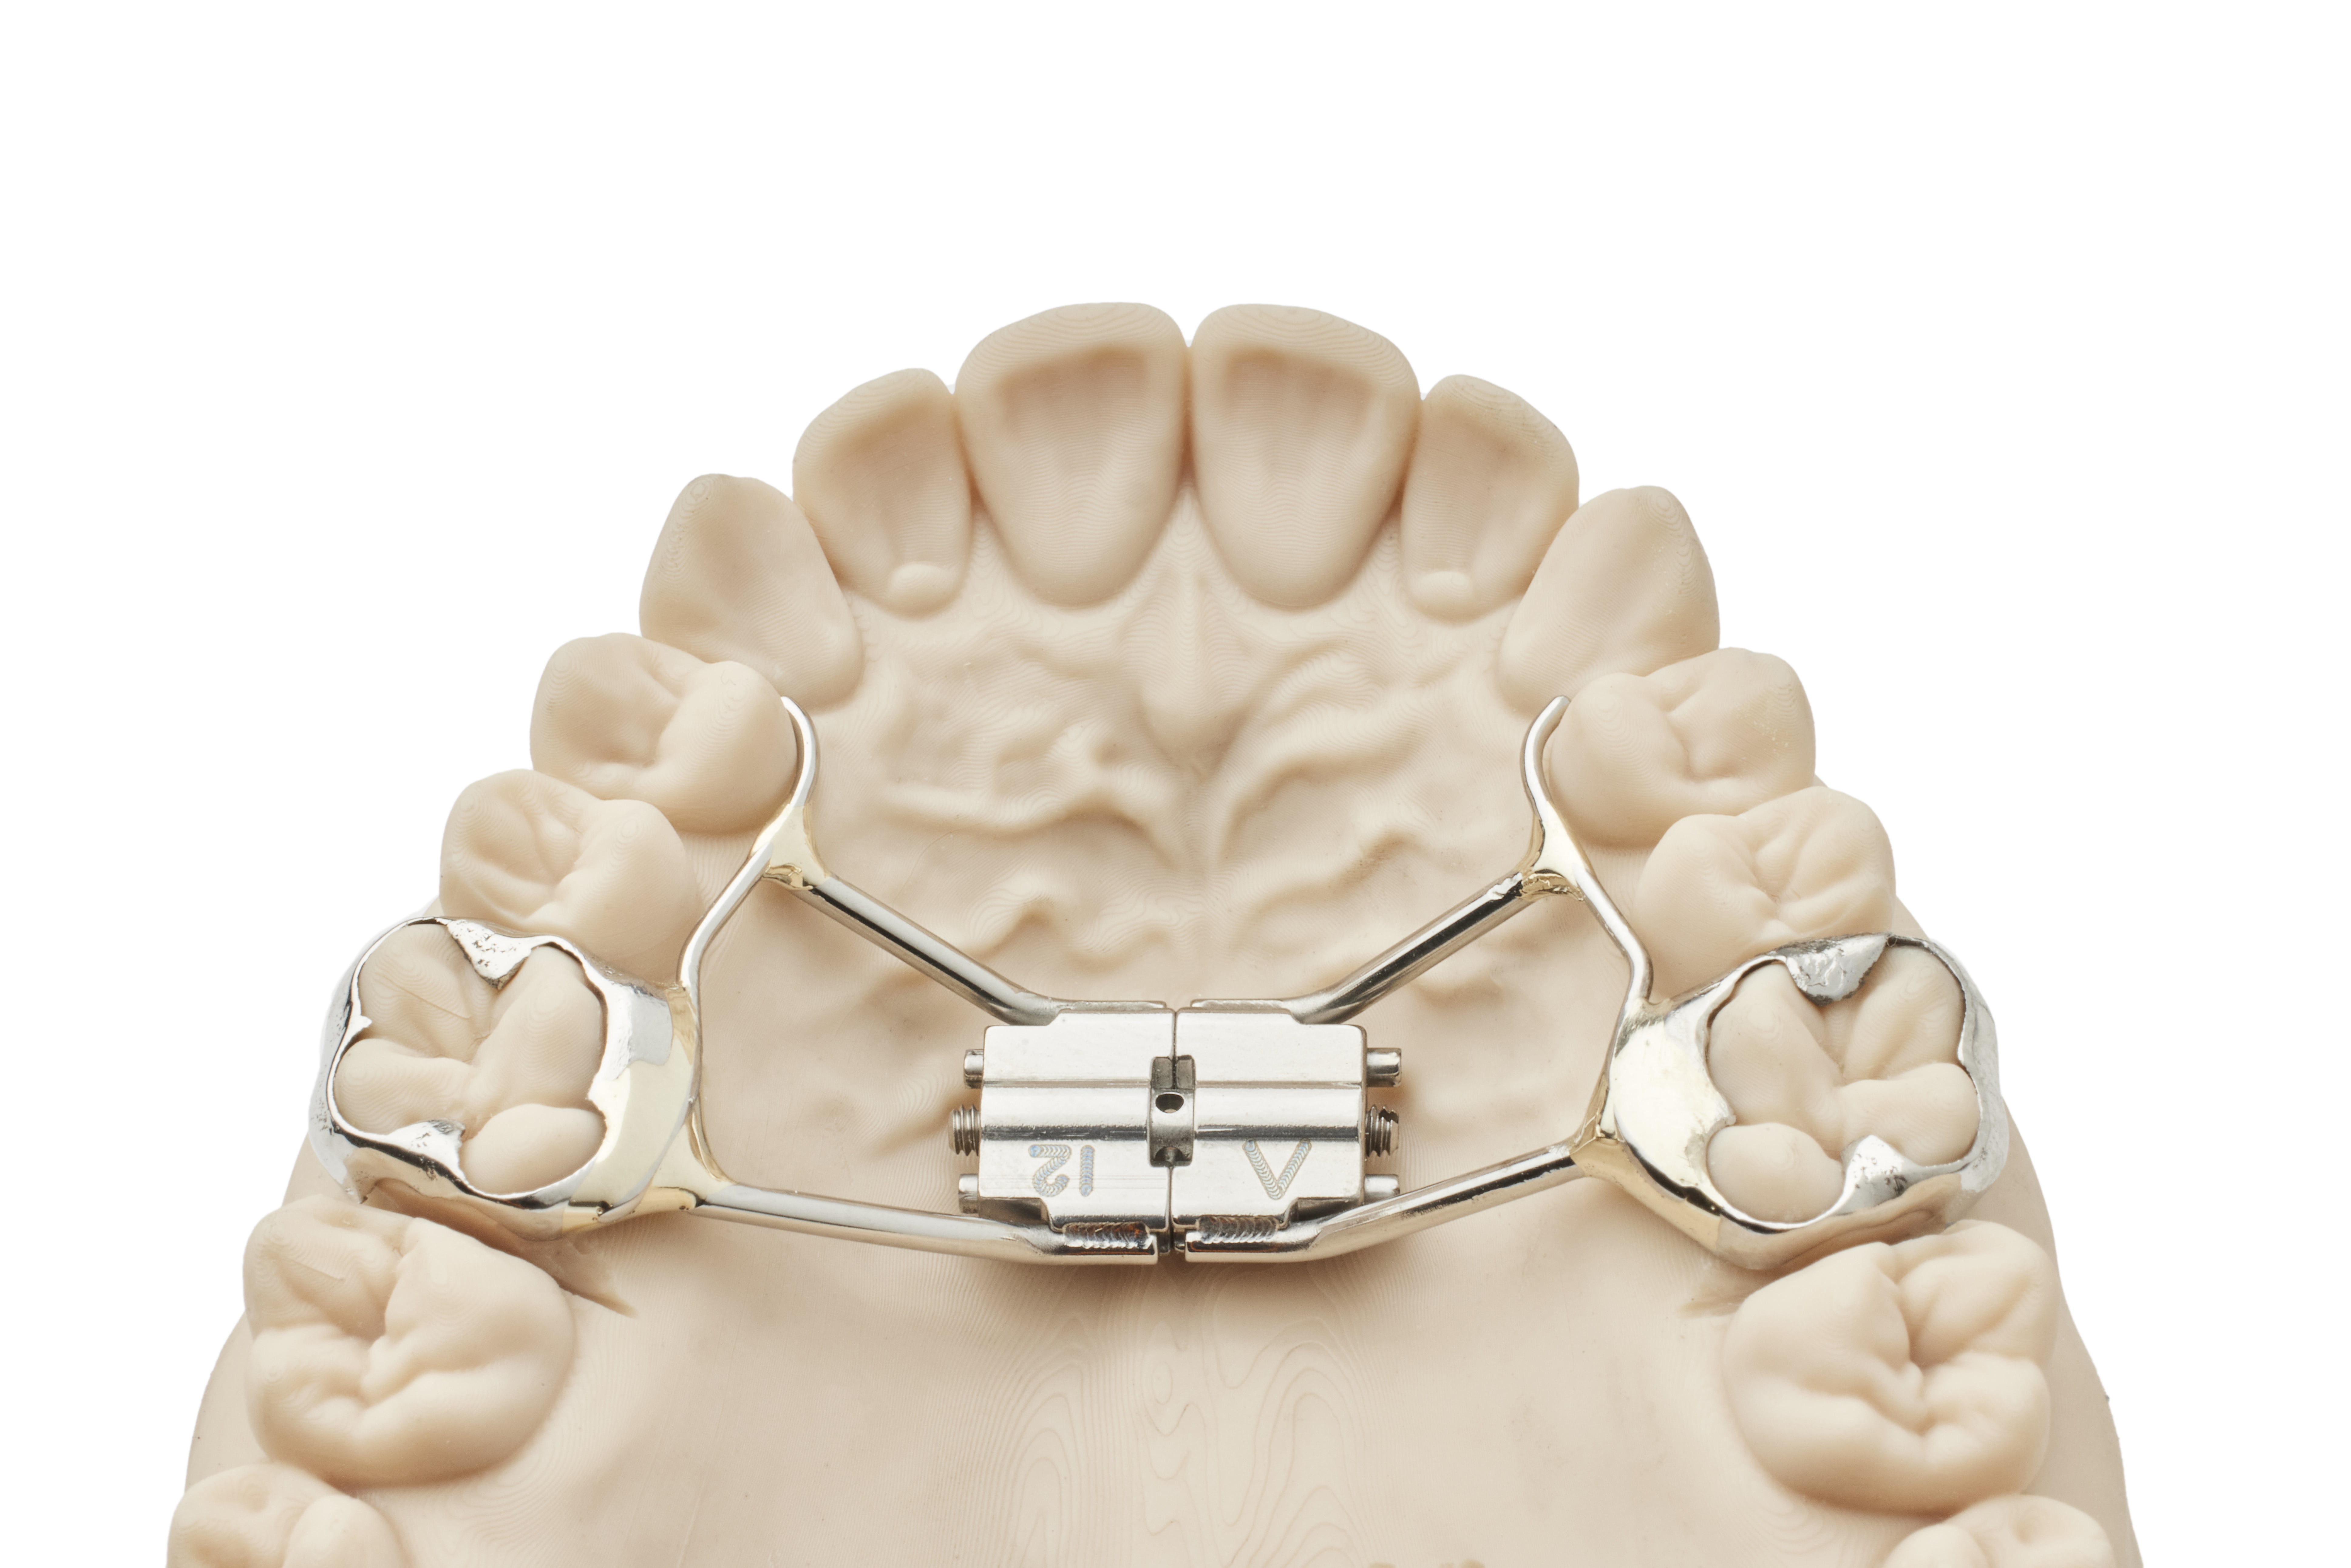 orthodontic teeth model demonstrating dental alignment